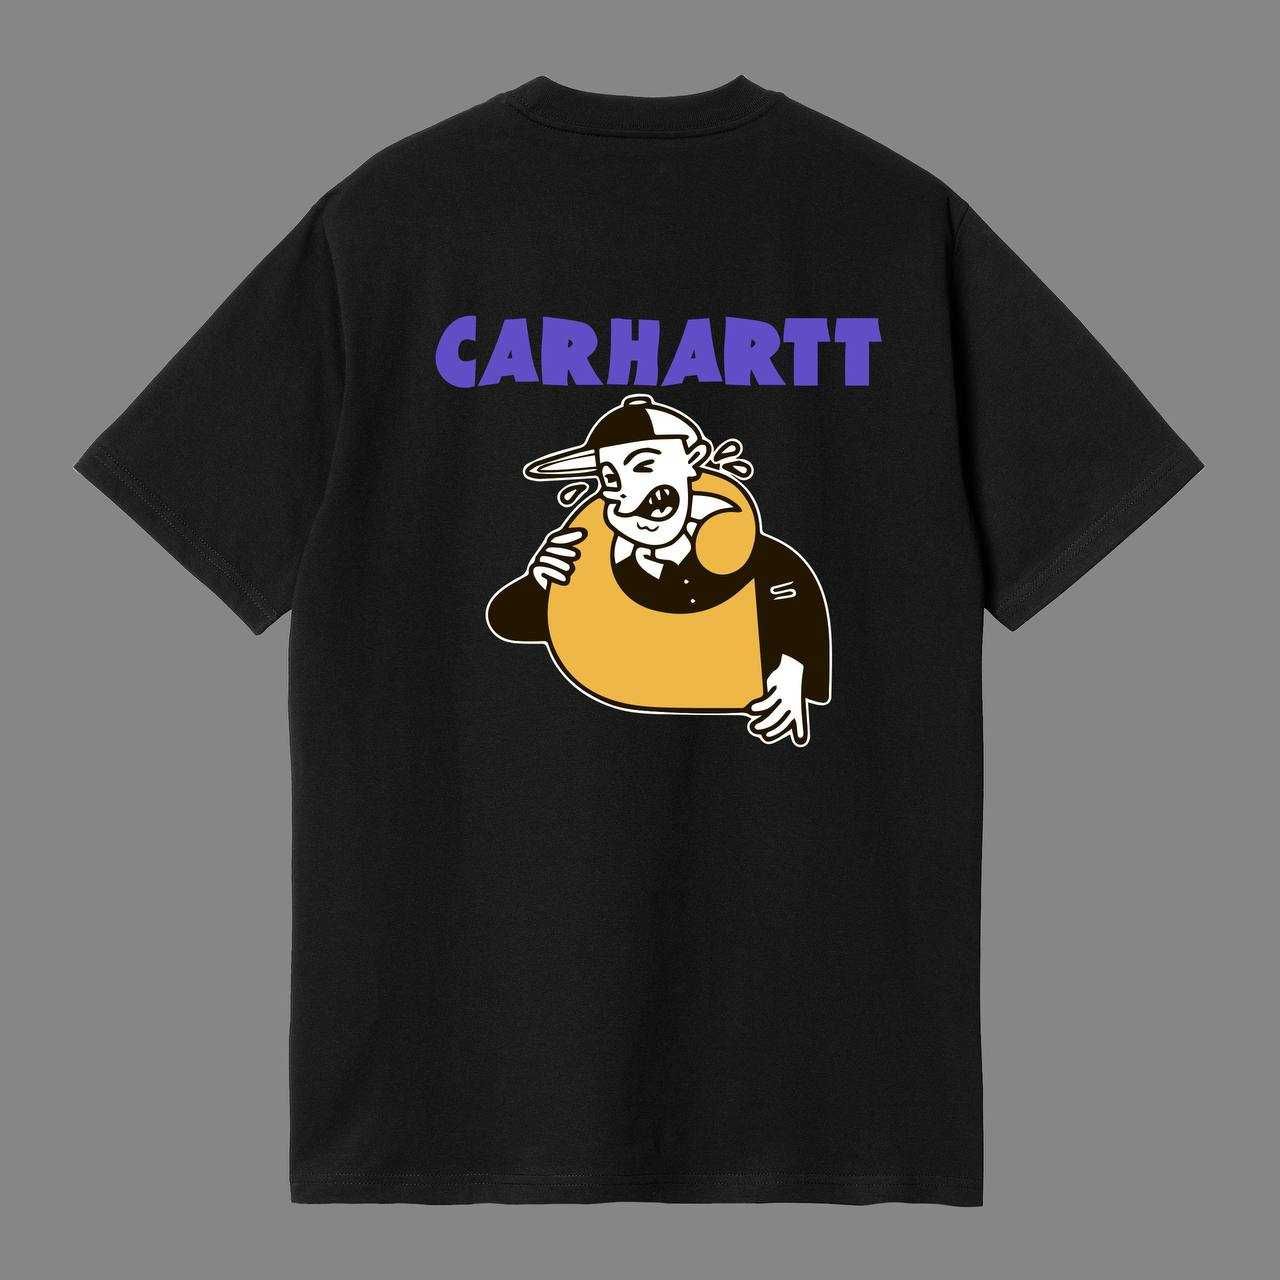 Футболка carhartt кархарт оригинал черная фиол лого